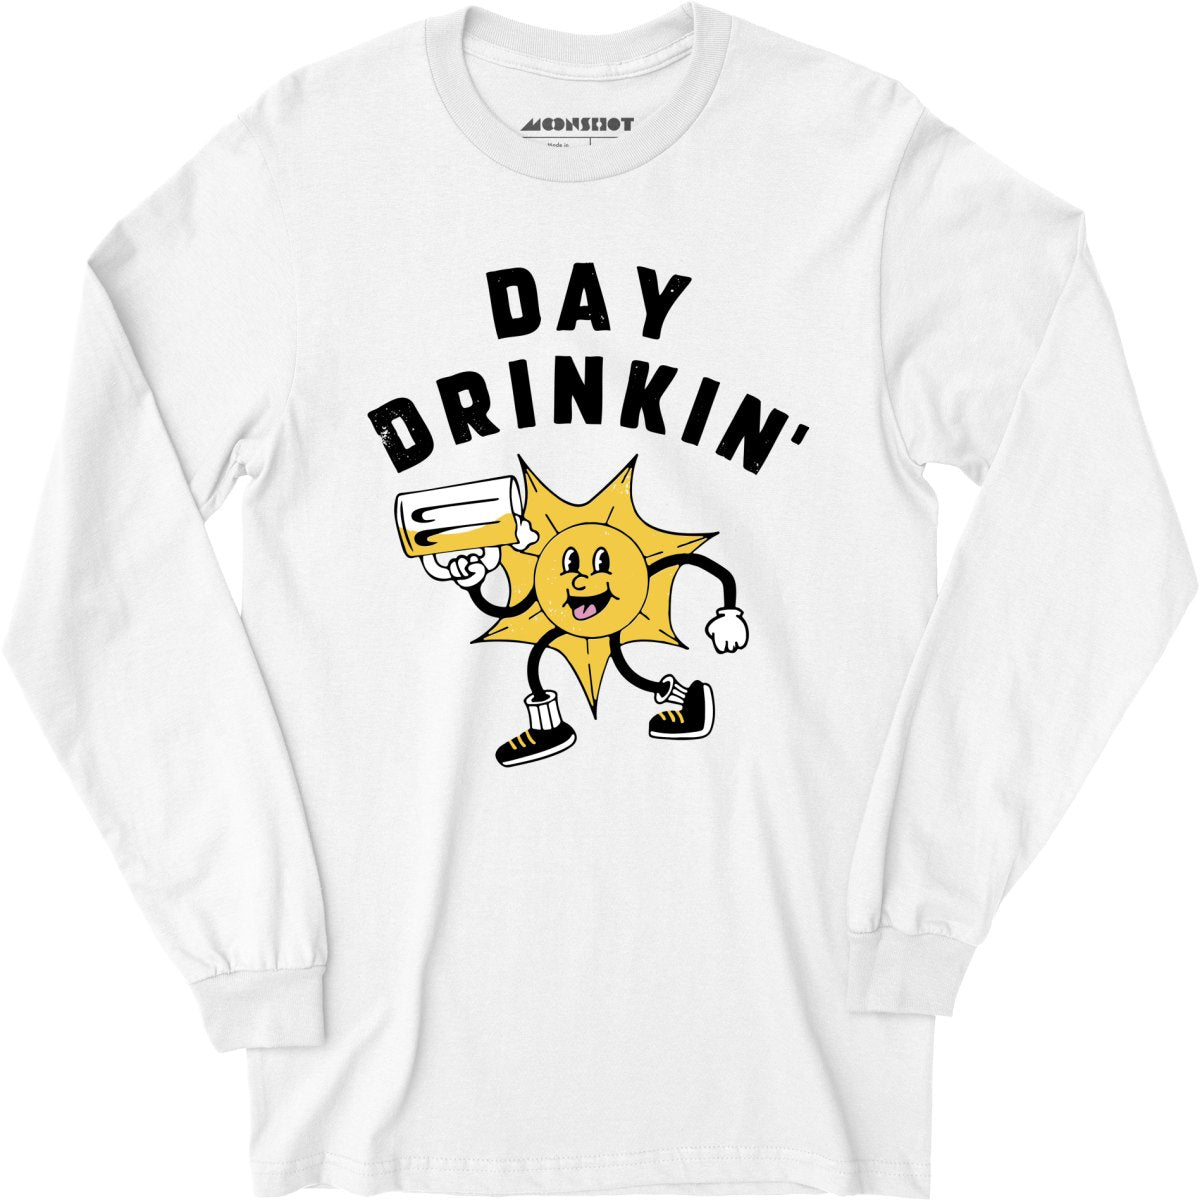 Day Drinkin' - Long Sleeve T-Shirt